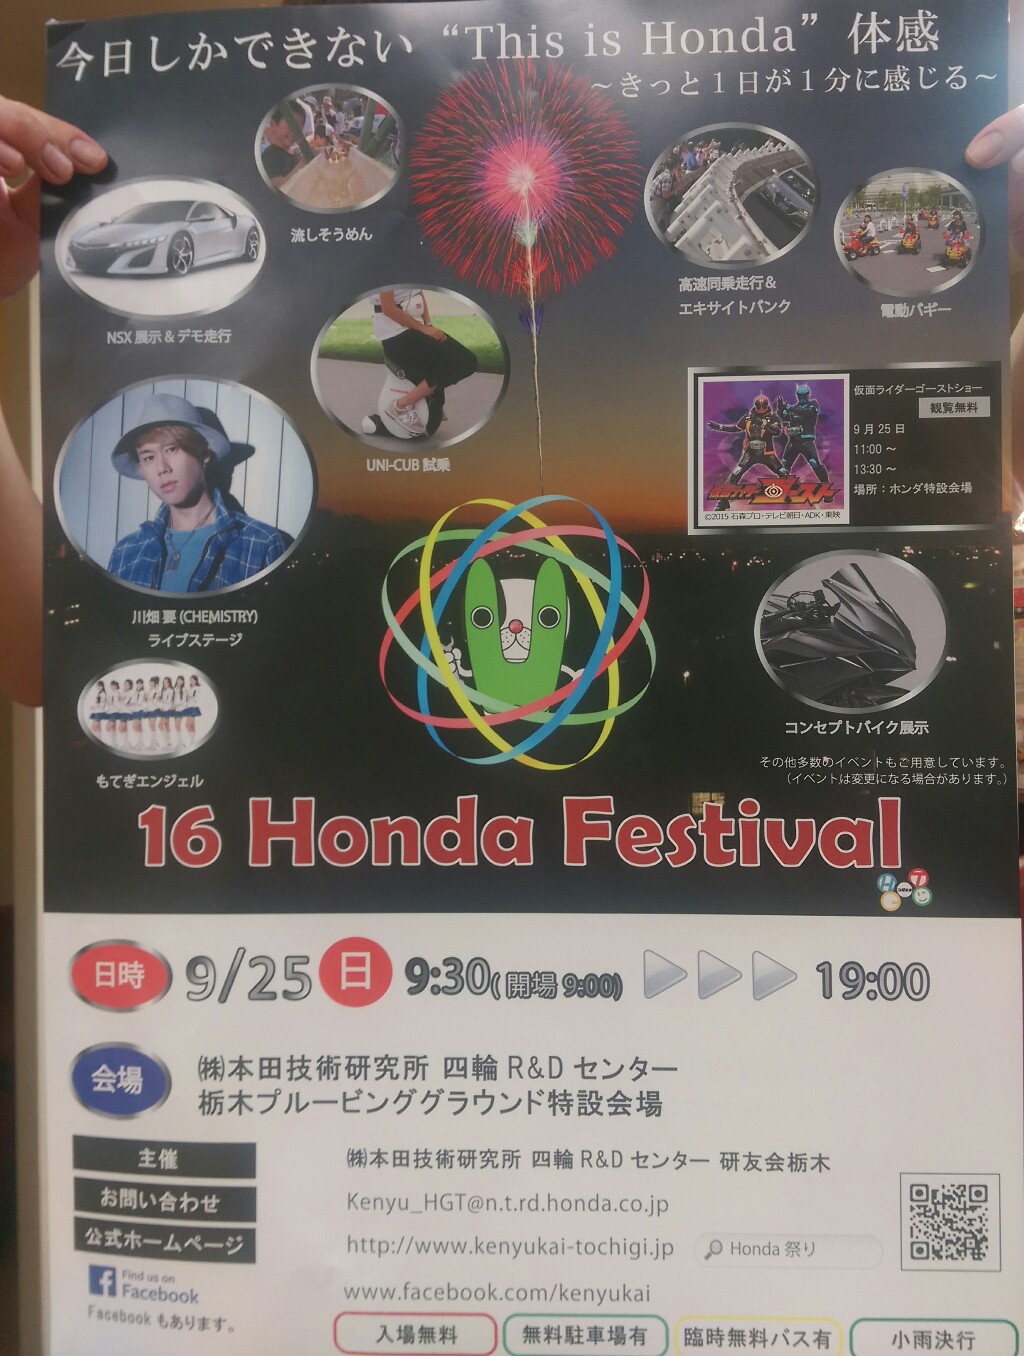 １６ Honda Festival ホンダ祭 宇都宮の理容美容リトルウイング